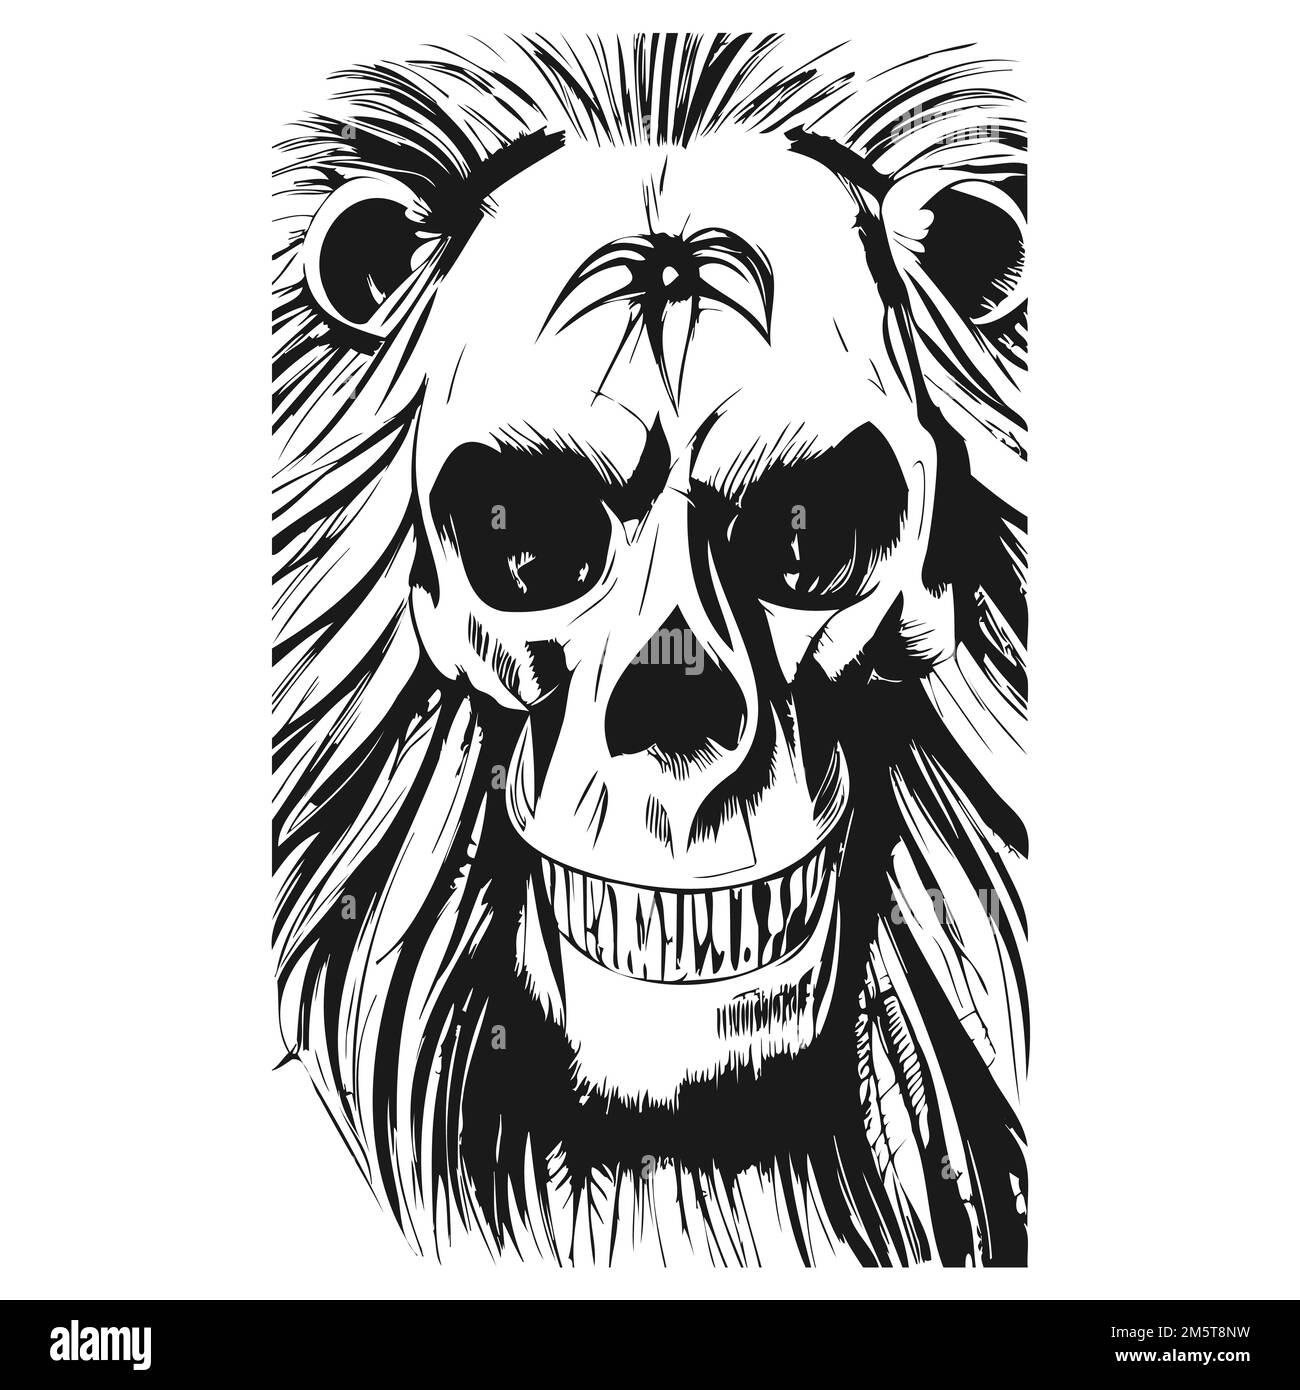 Lion Skull Sketch by Magy114 on DeviantArt